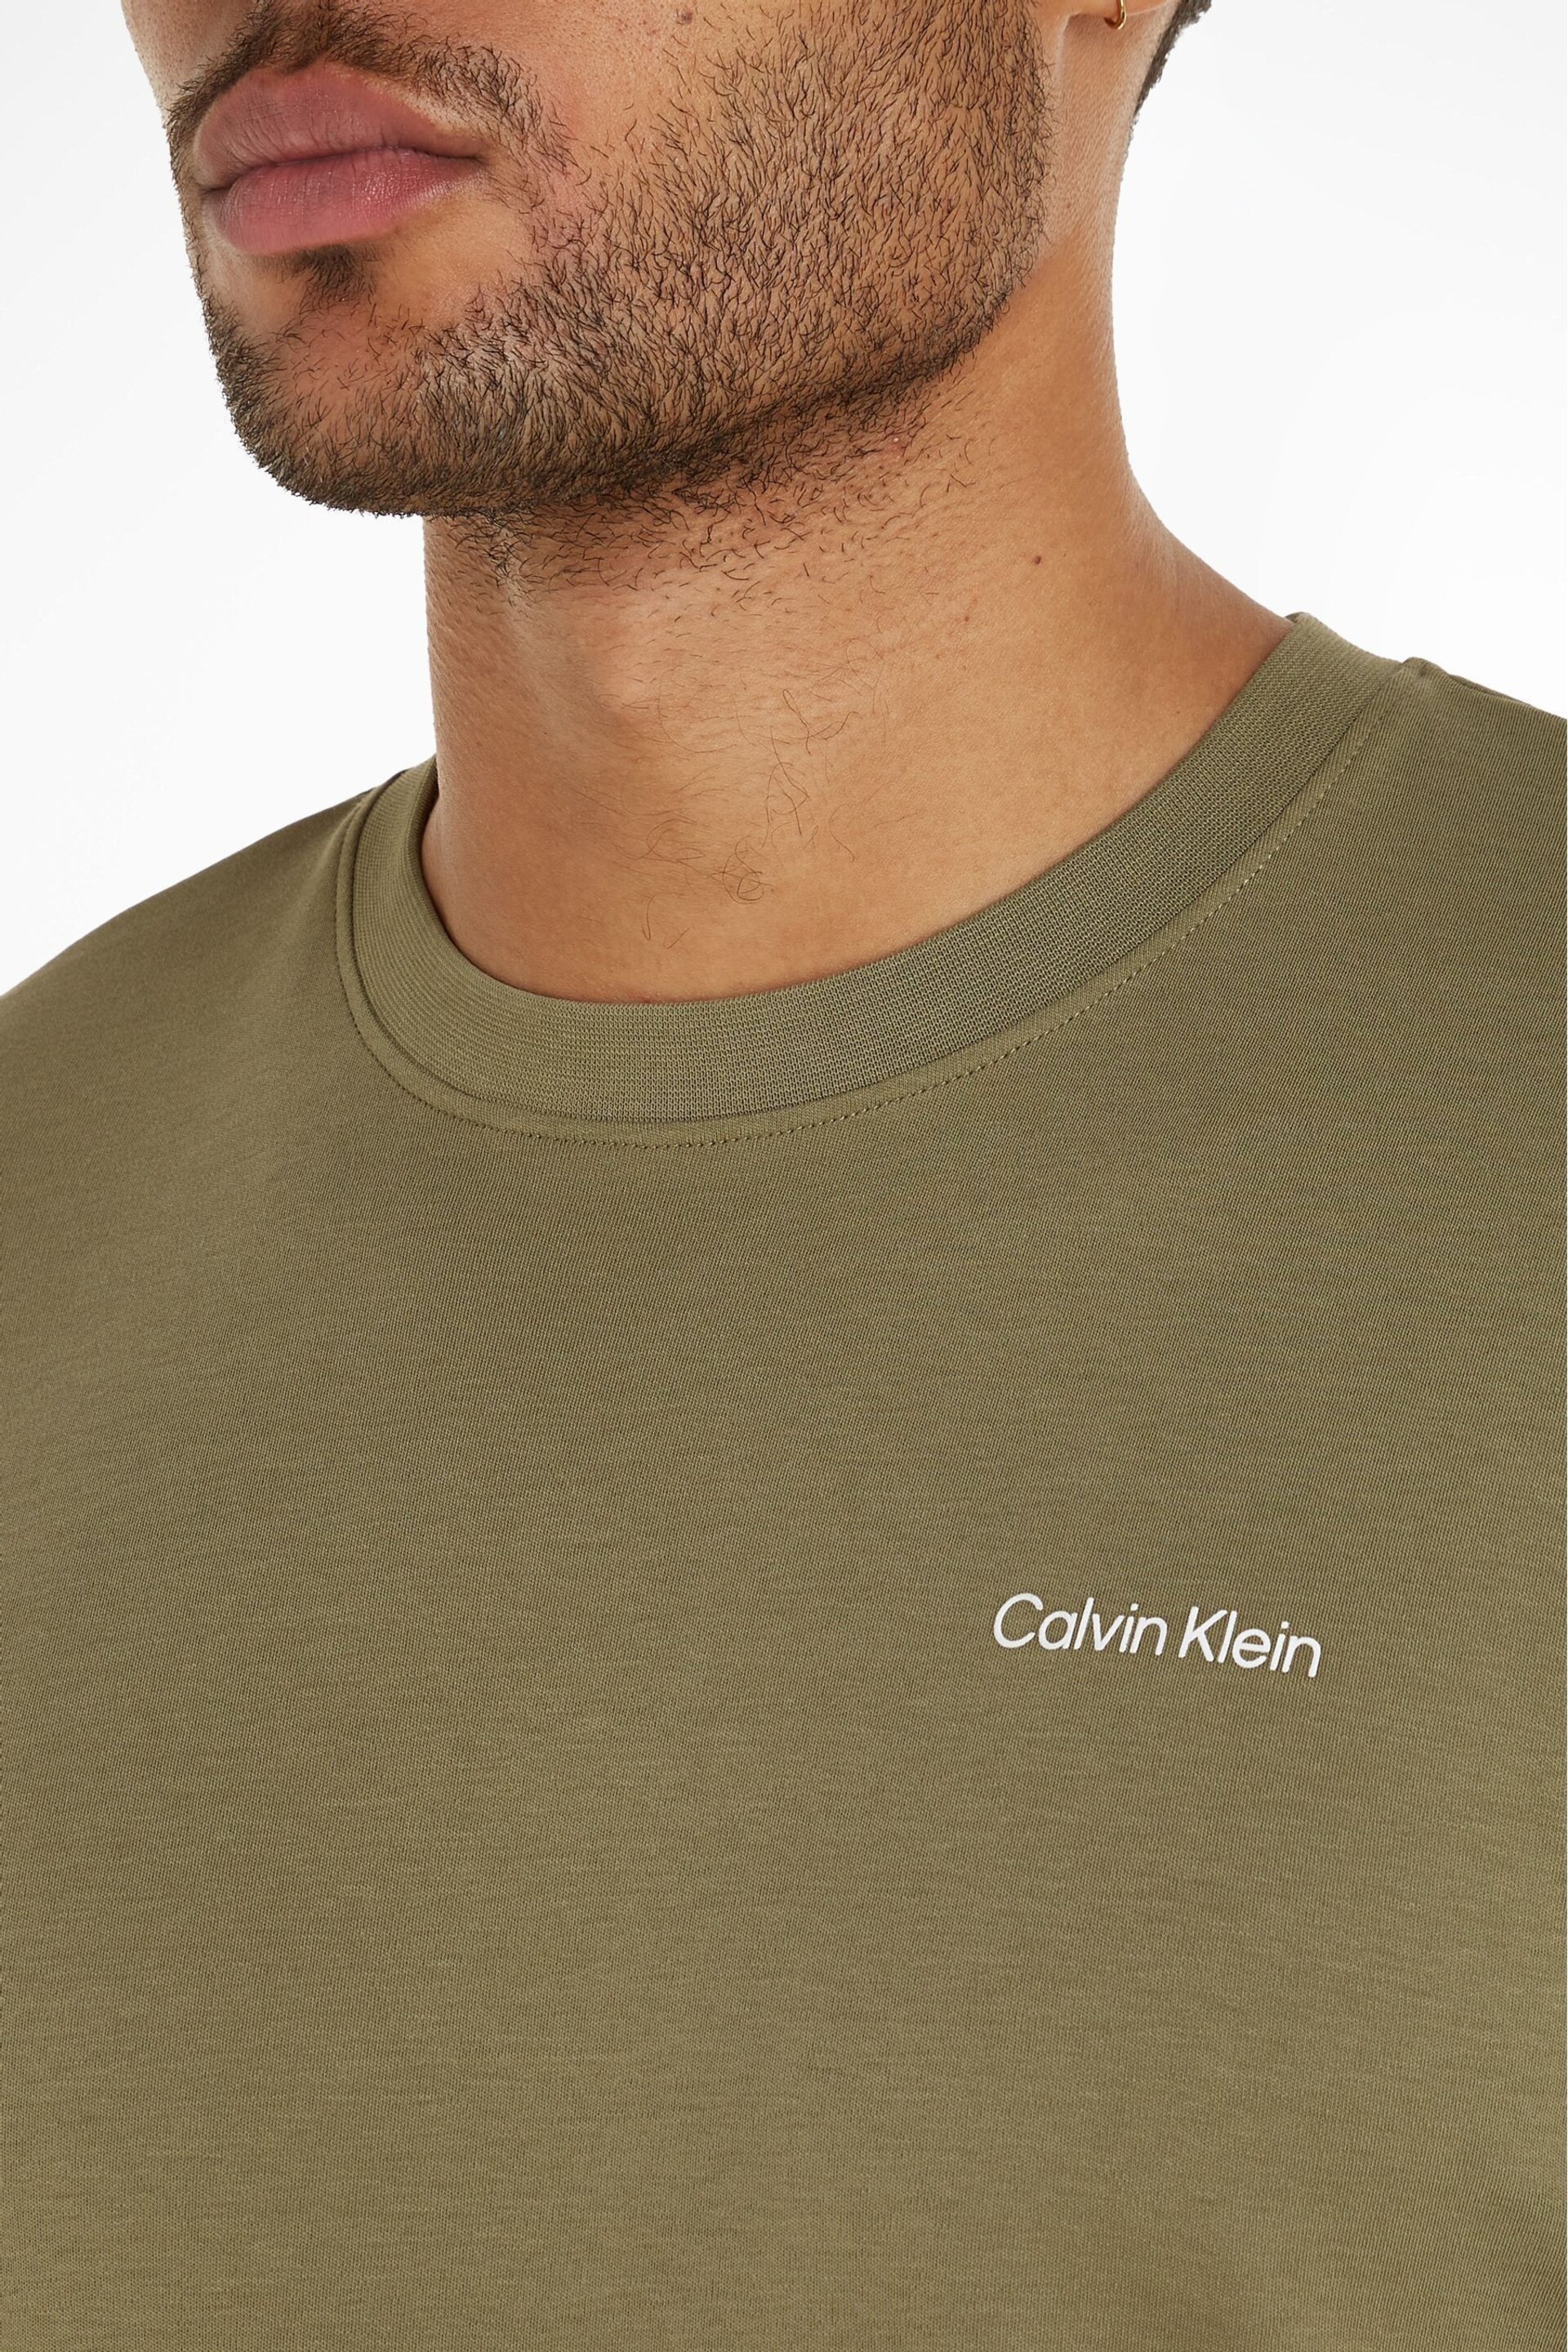 Calvin Klein Green Logo Interlock T-Shirt - Image 3 of 5